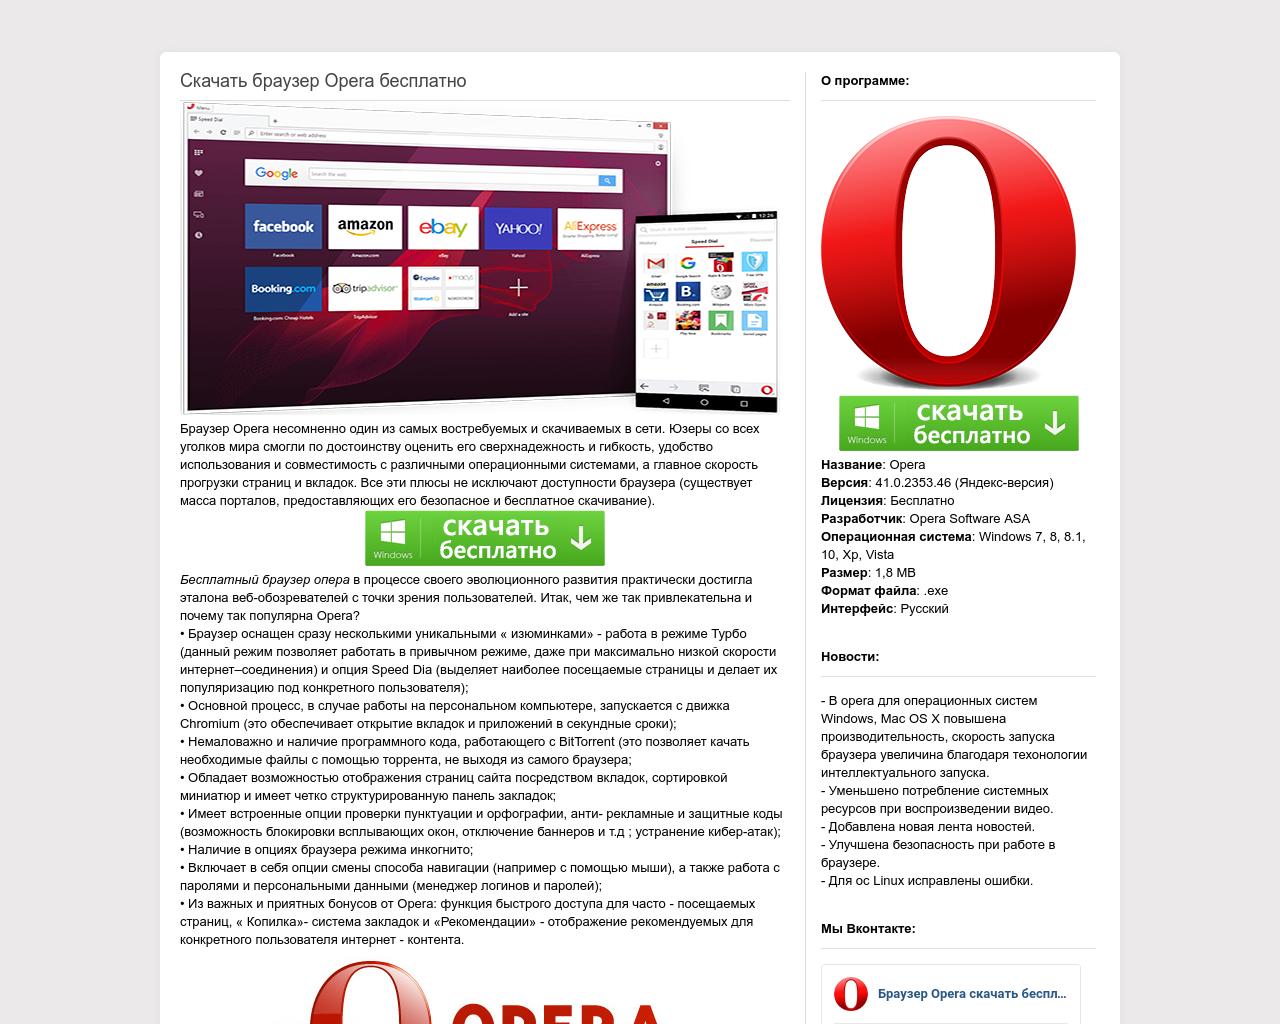 Изображение сайта operapc.ru в разрешении 1280x1024